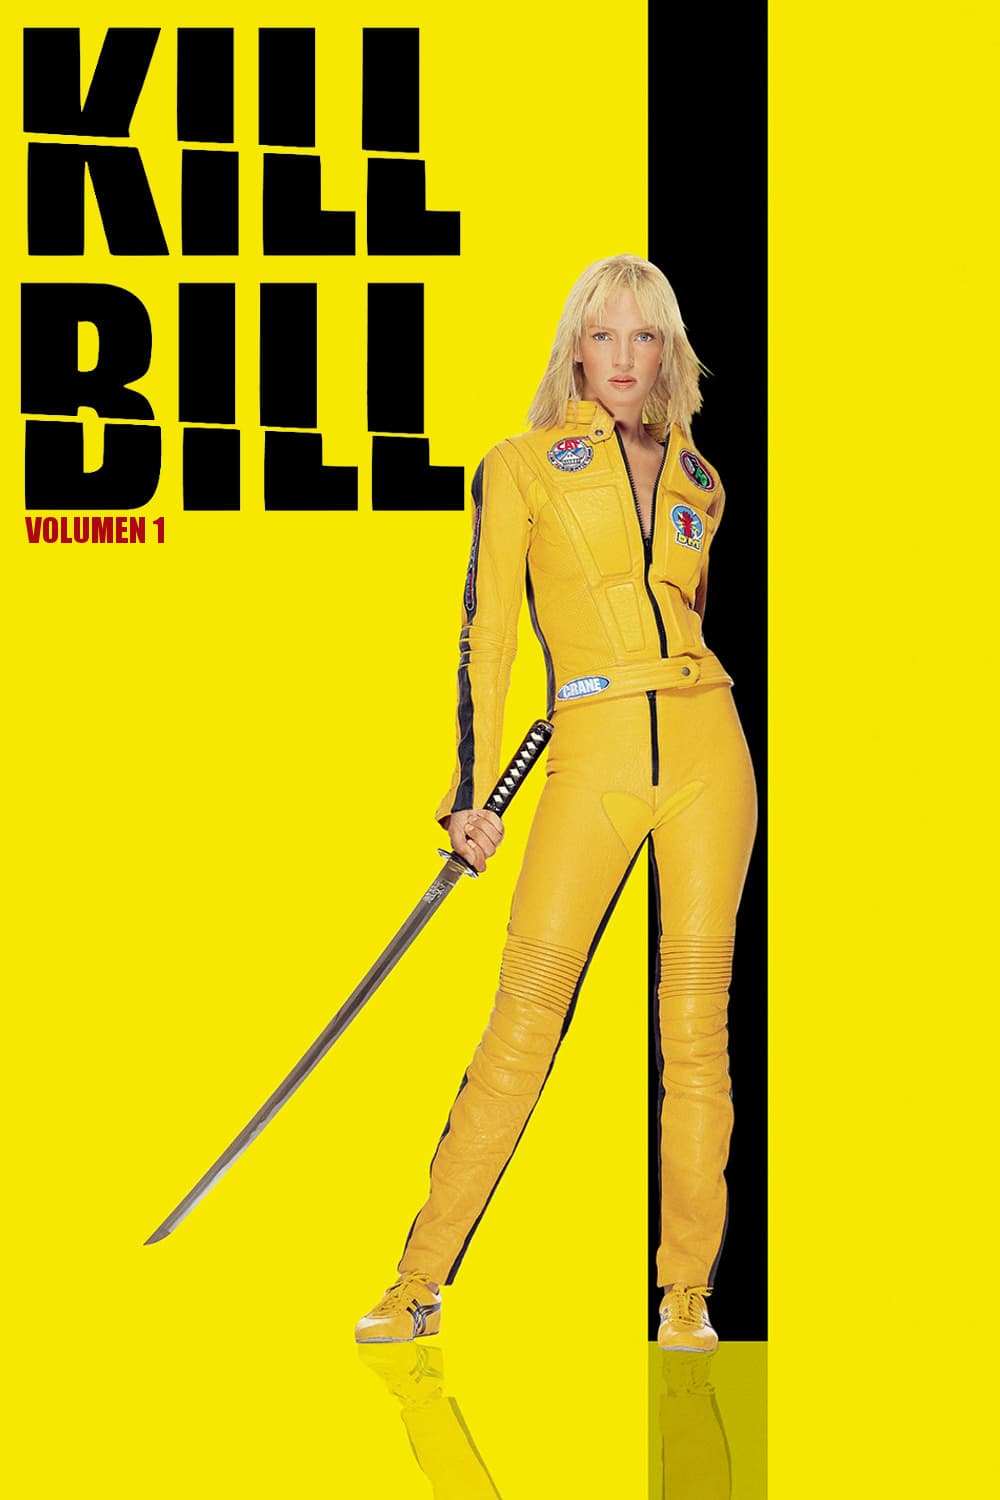 Kill Bill Vol. 1: La venganza